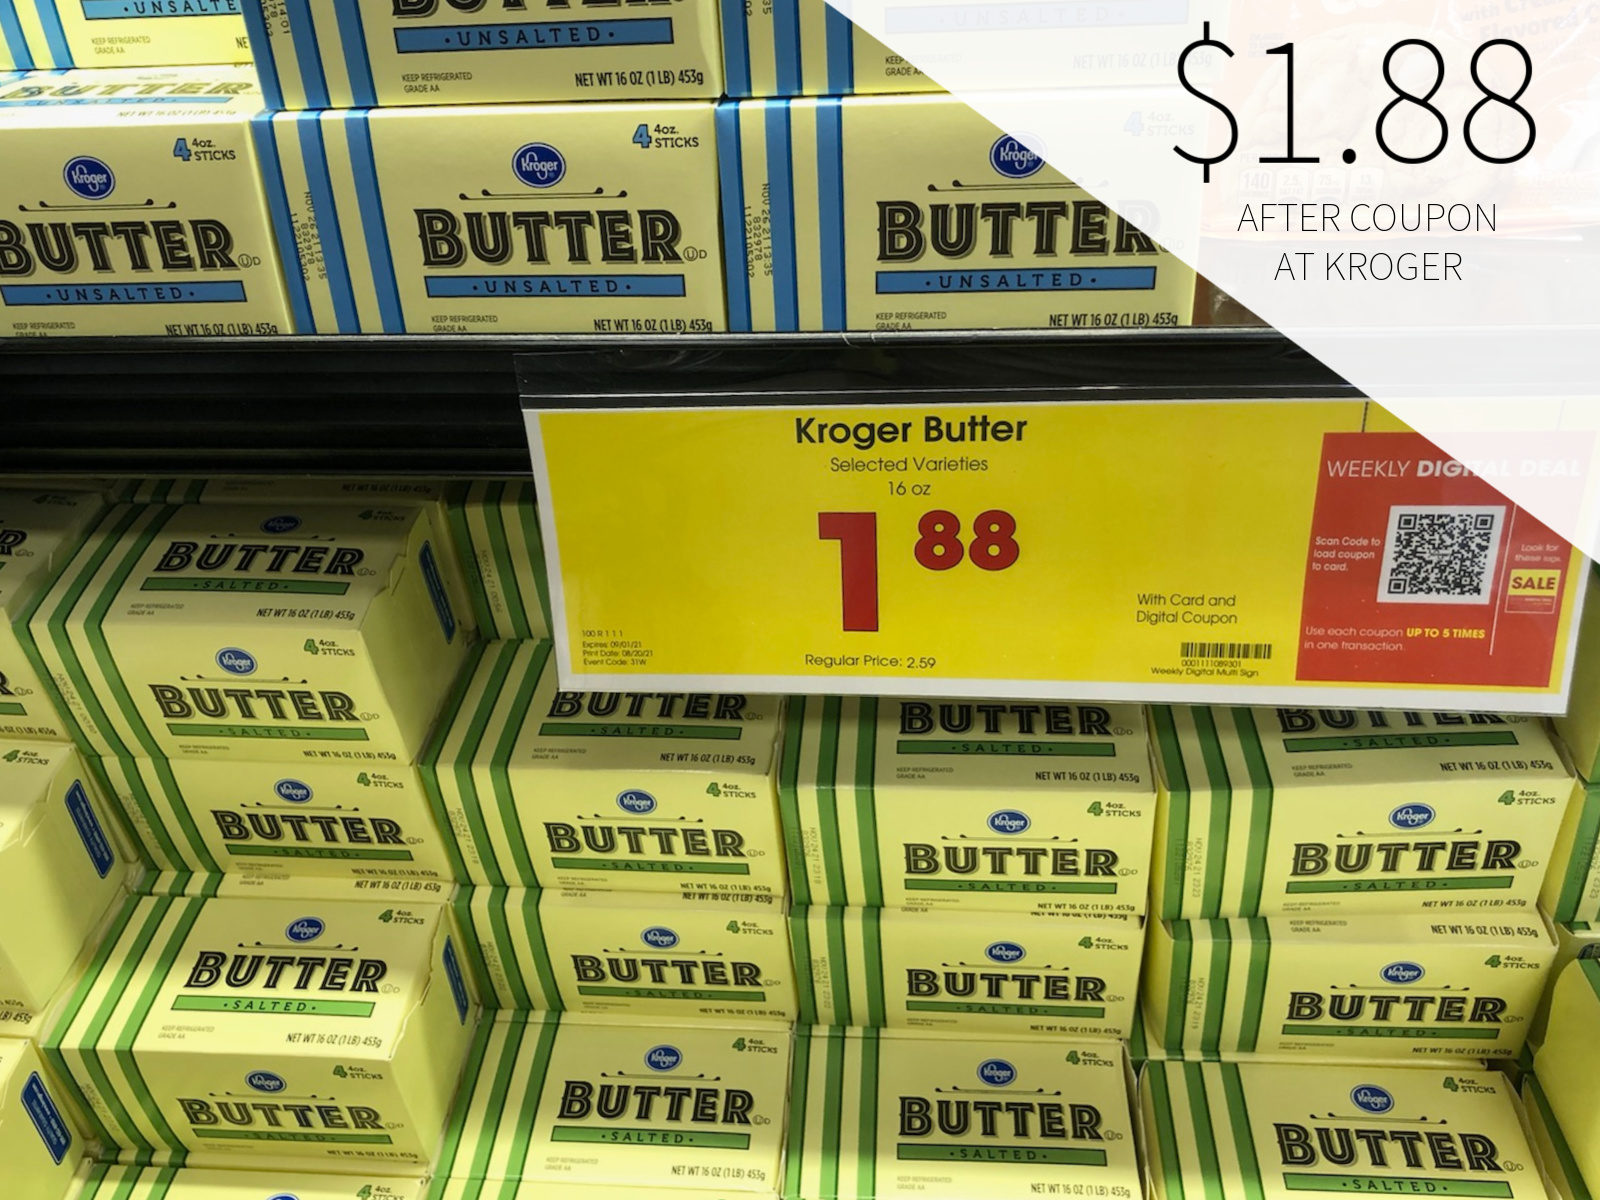 Kroger Butter Only .88